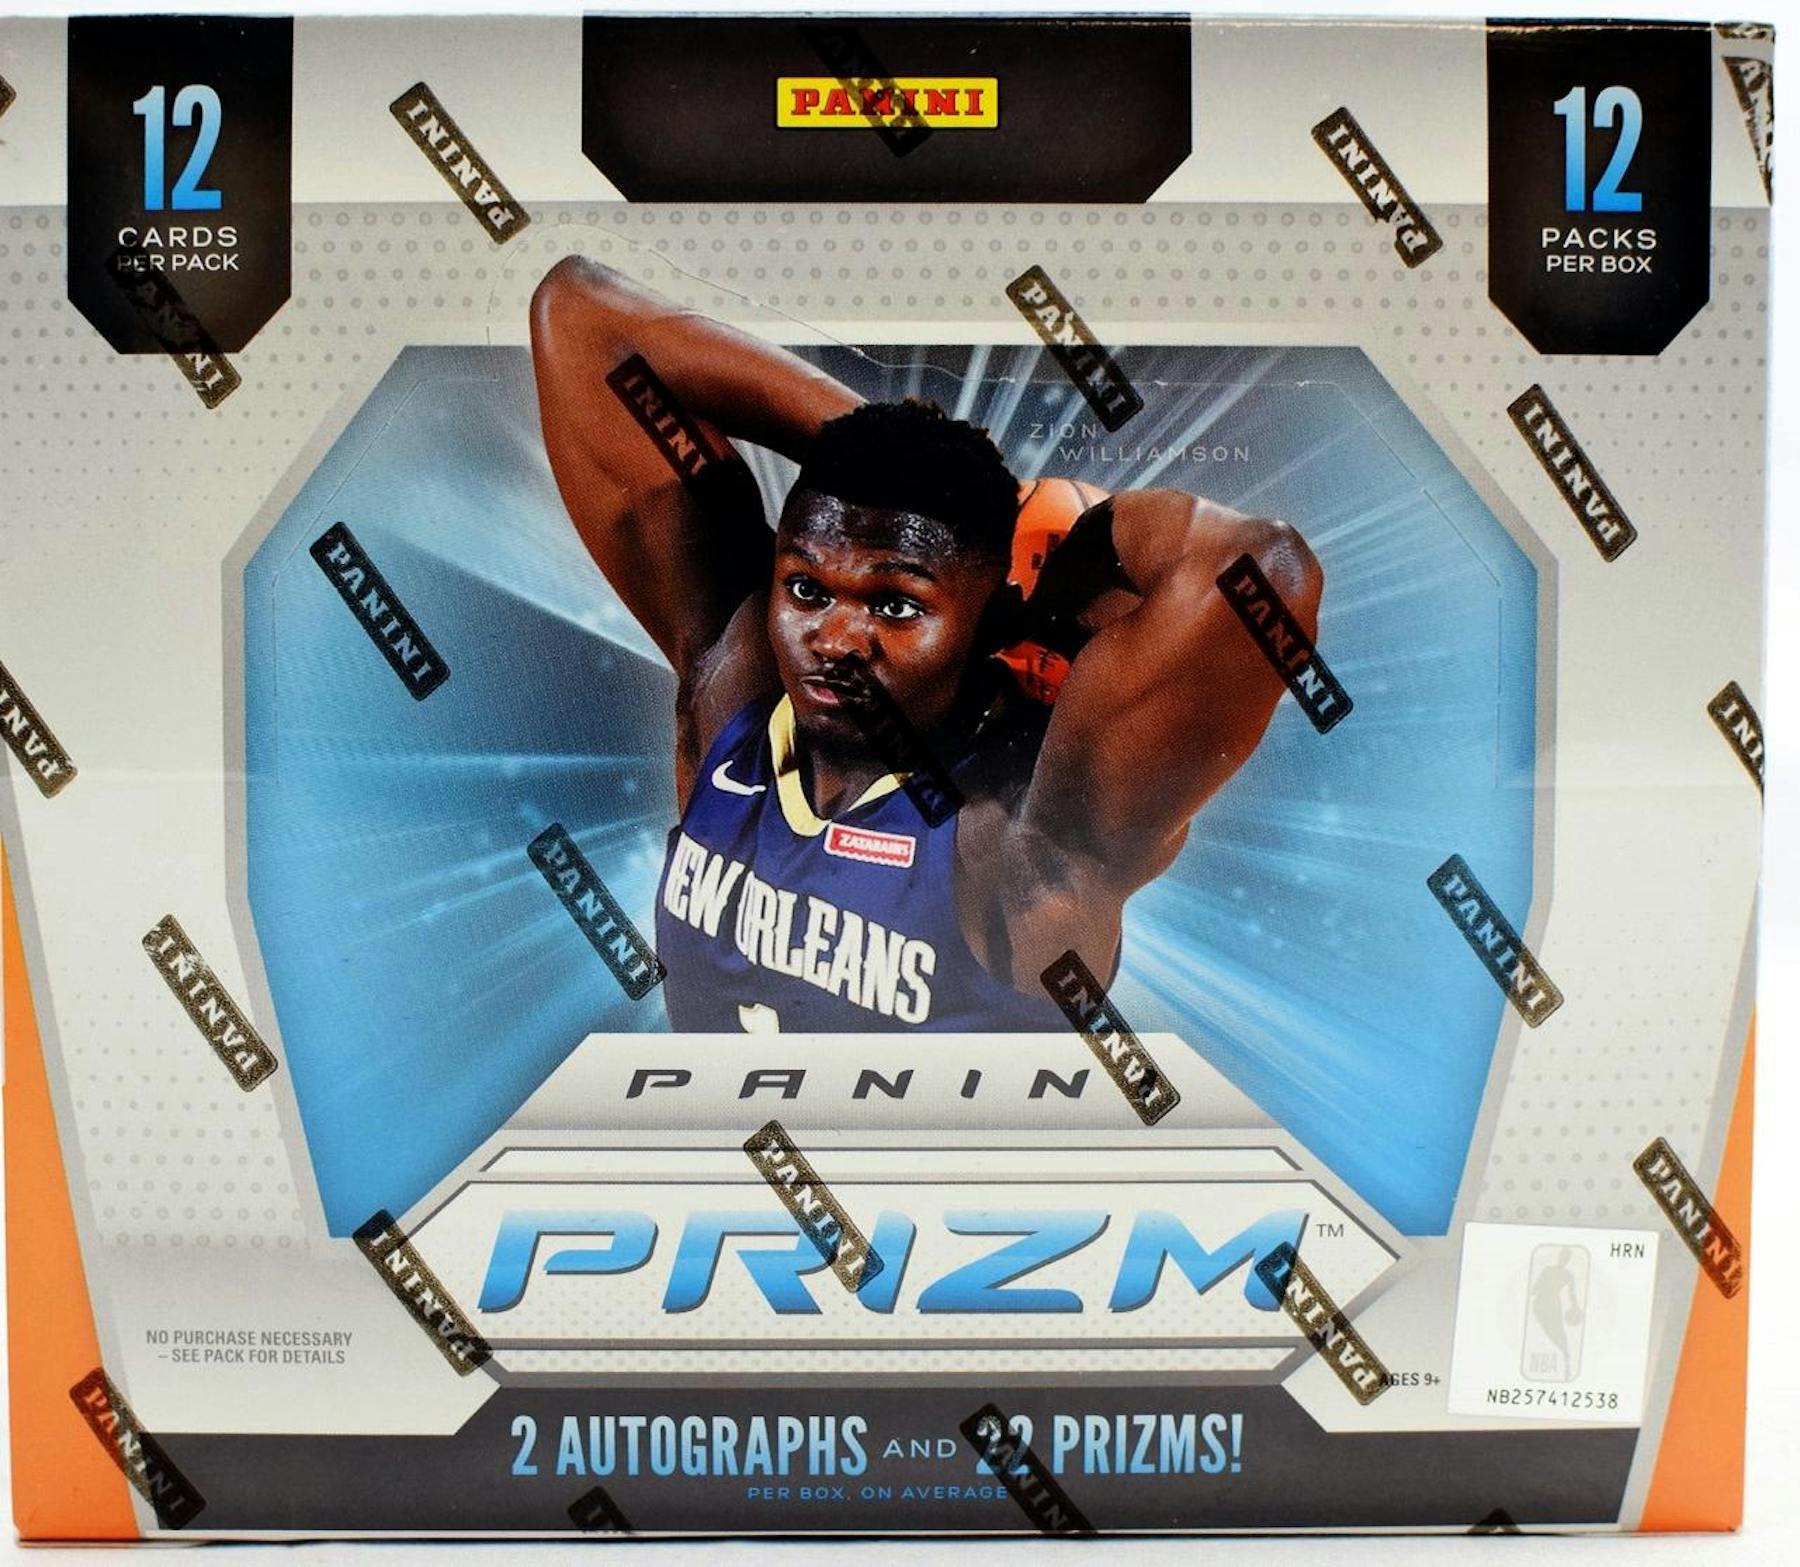 2019/20 Panini Prizm Basketball Hobby Box